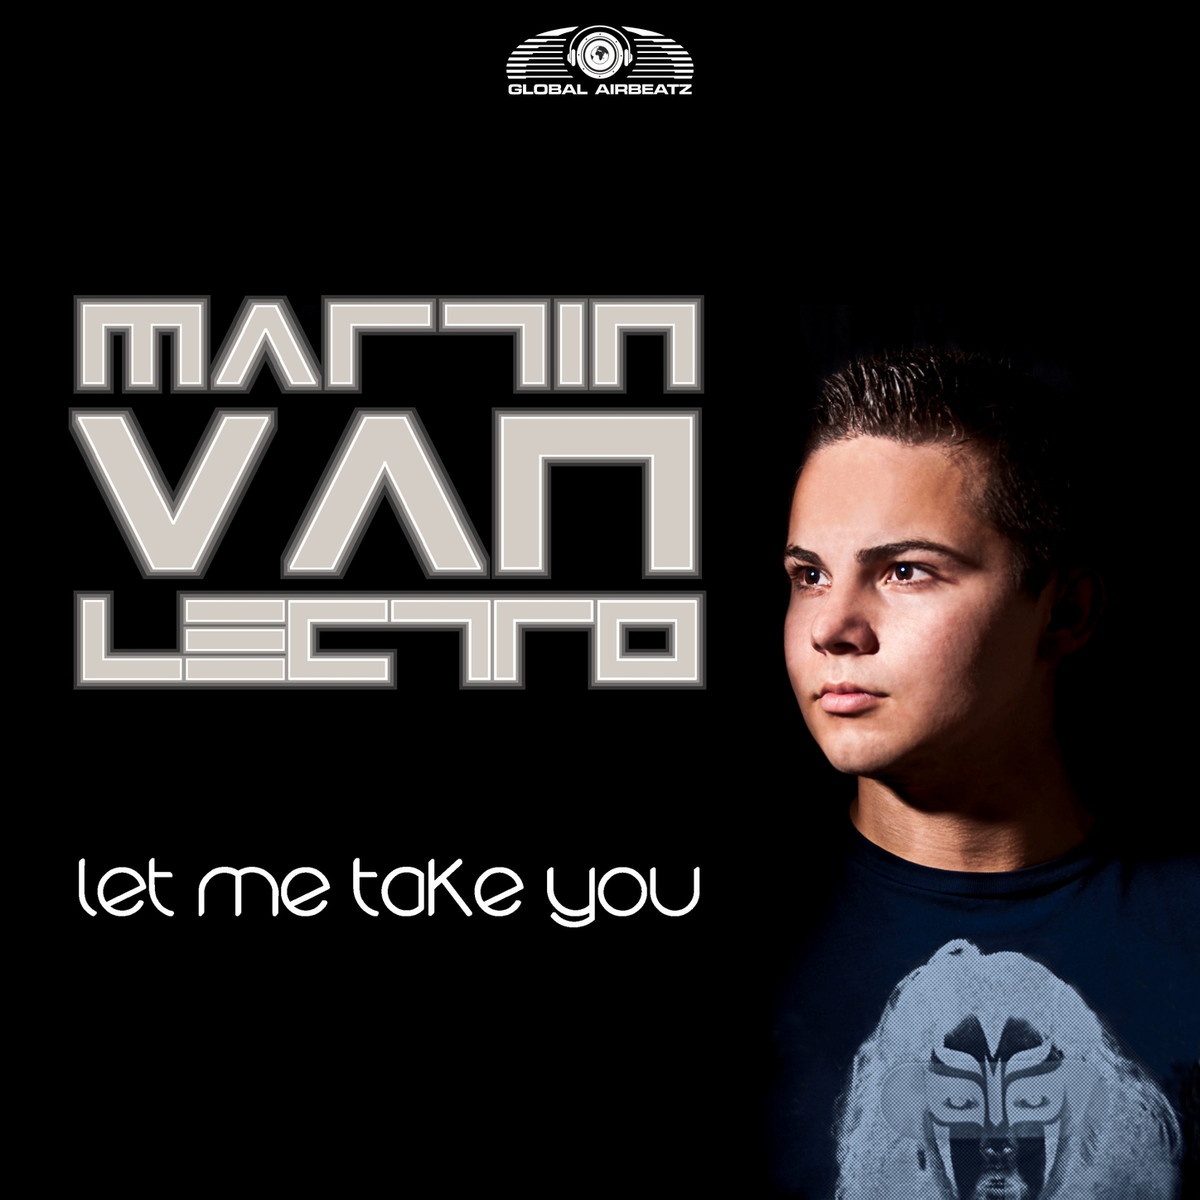 Let Me Take You (Original Mix)